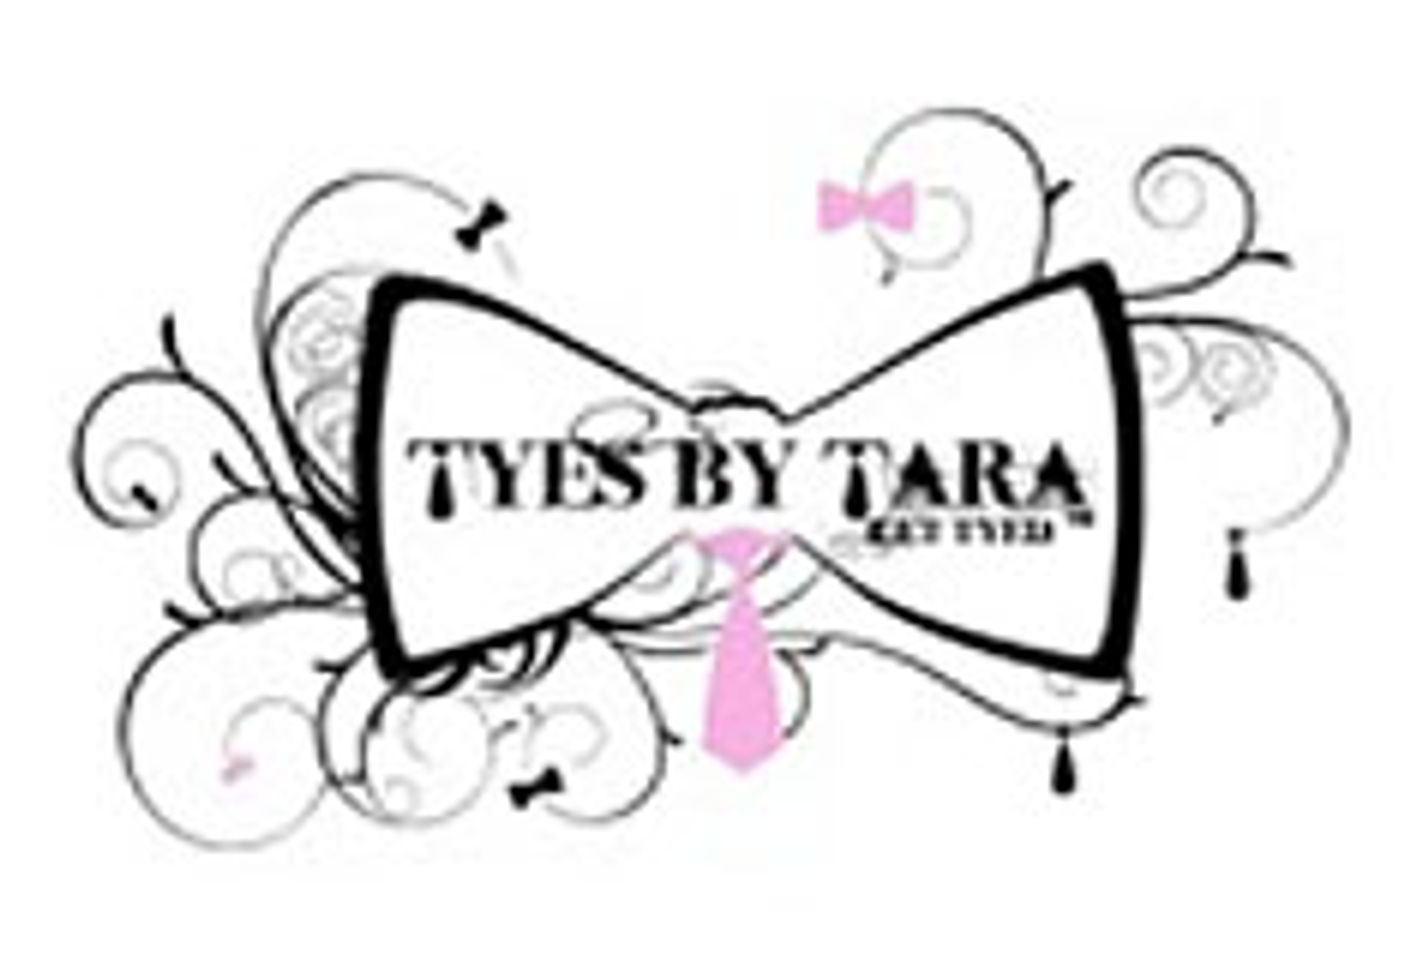 tyes.by.tara Unveils New Handcuff Design